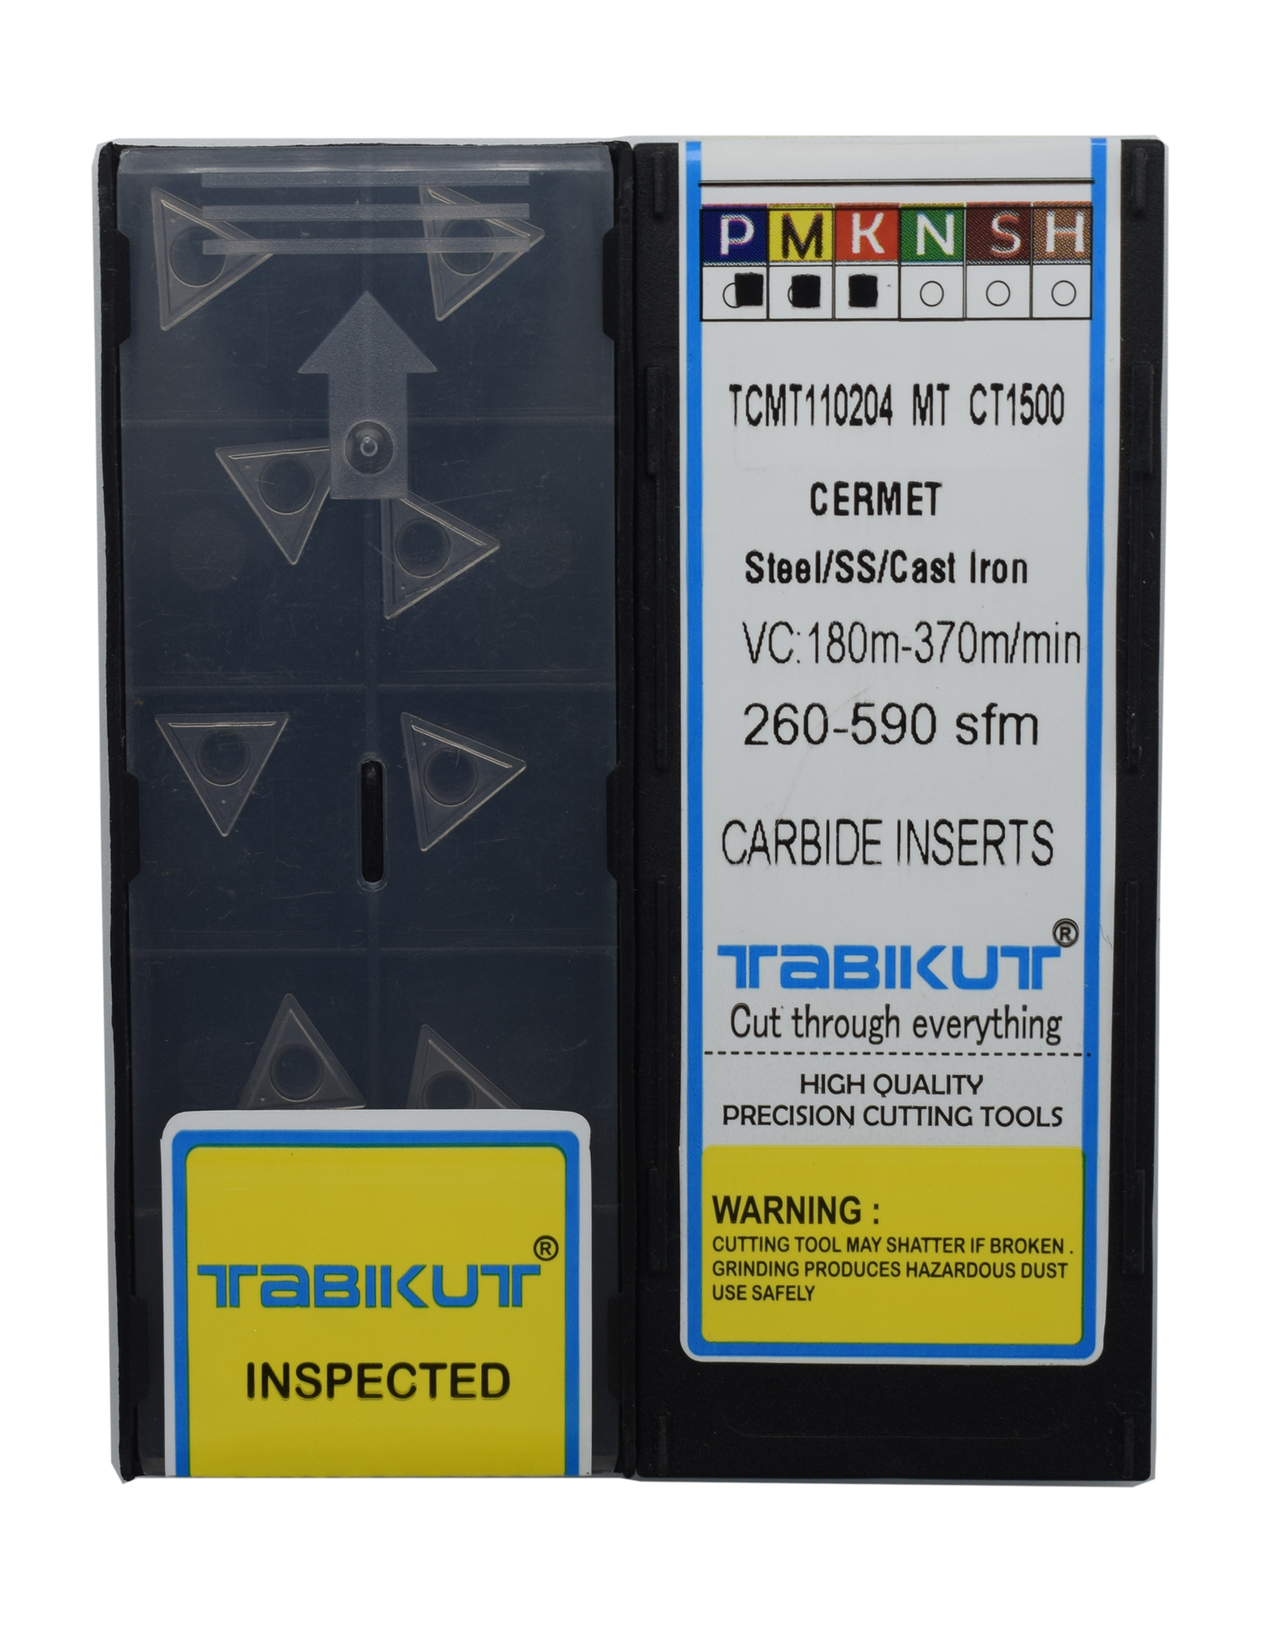 TCMT110204 MT CT1500 Cermet insert pack of 10